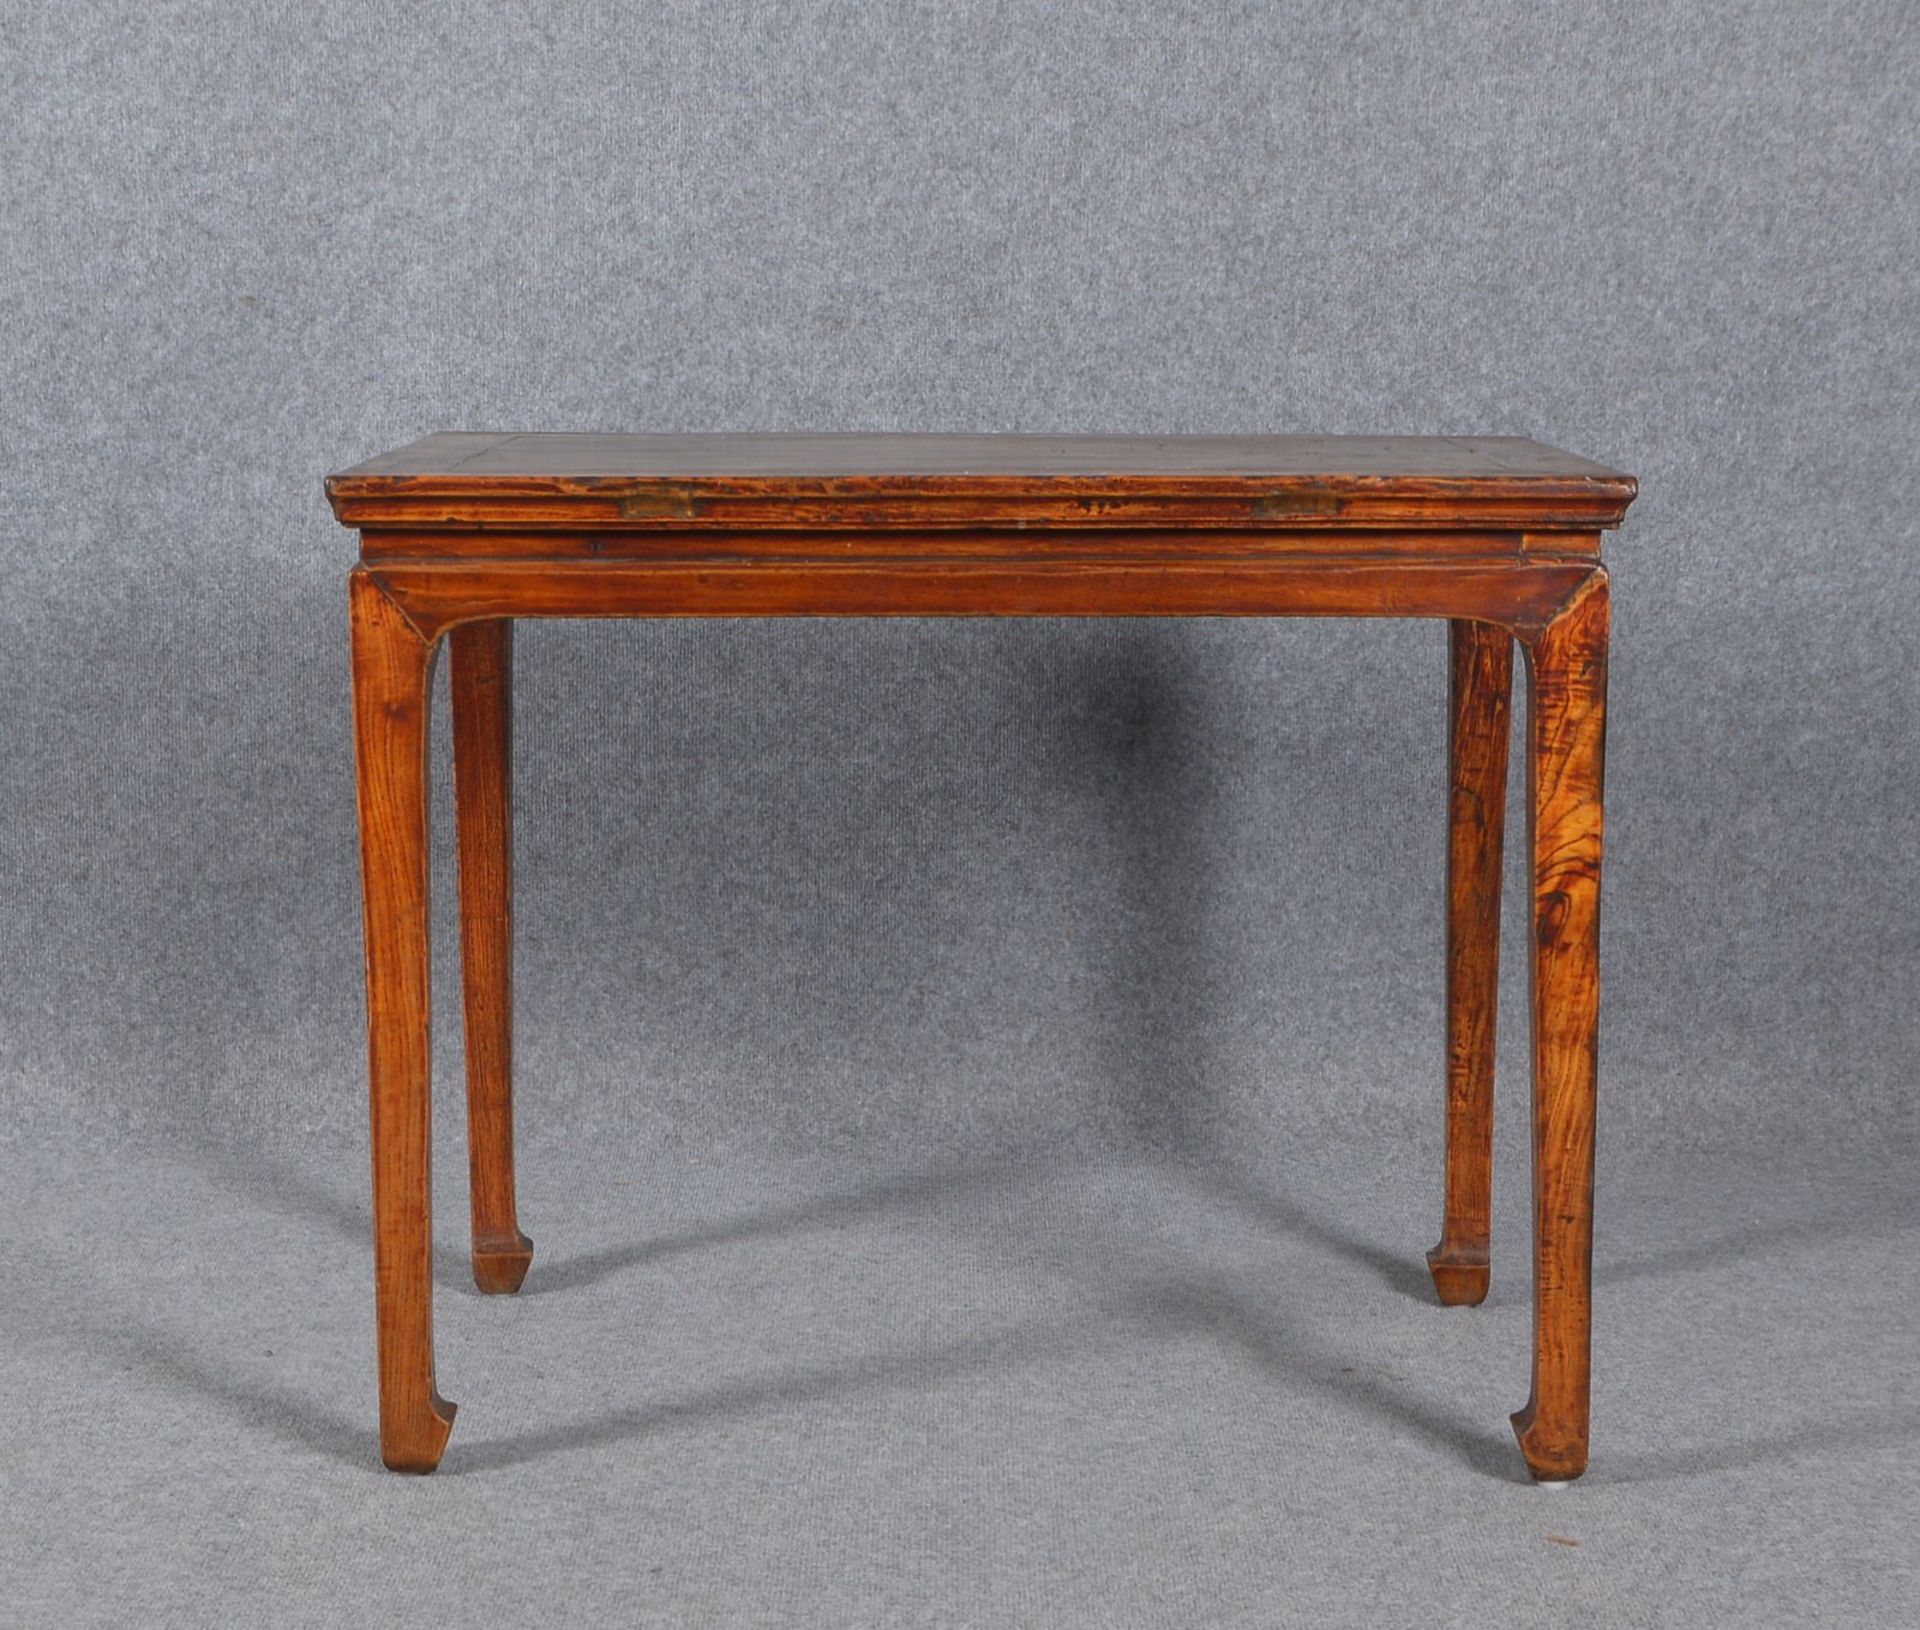 Kl. Tisch/Beistelltisch, Ulmenholz, rechteckige Form; Maße 71 x 85 x 50 cm - Bild 2 aus 2